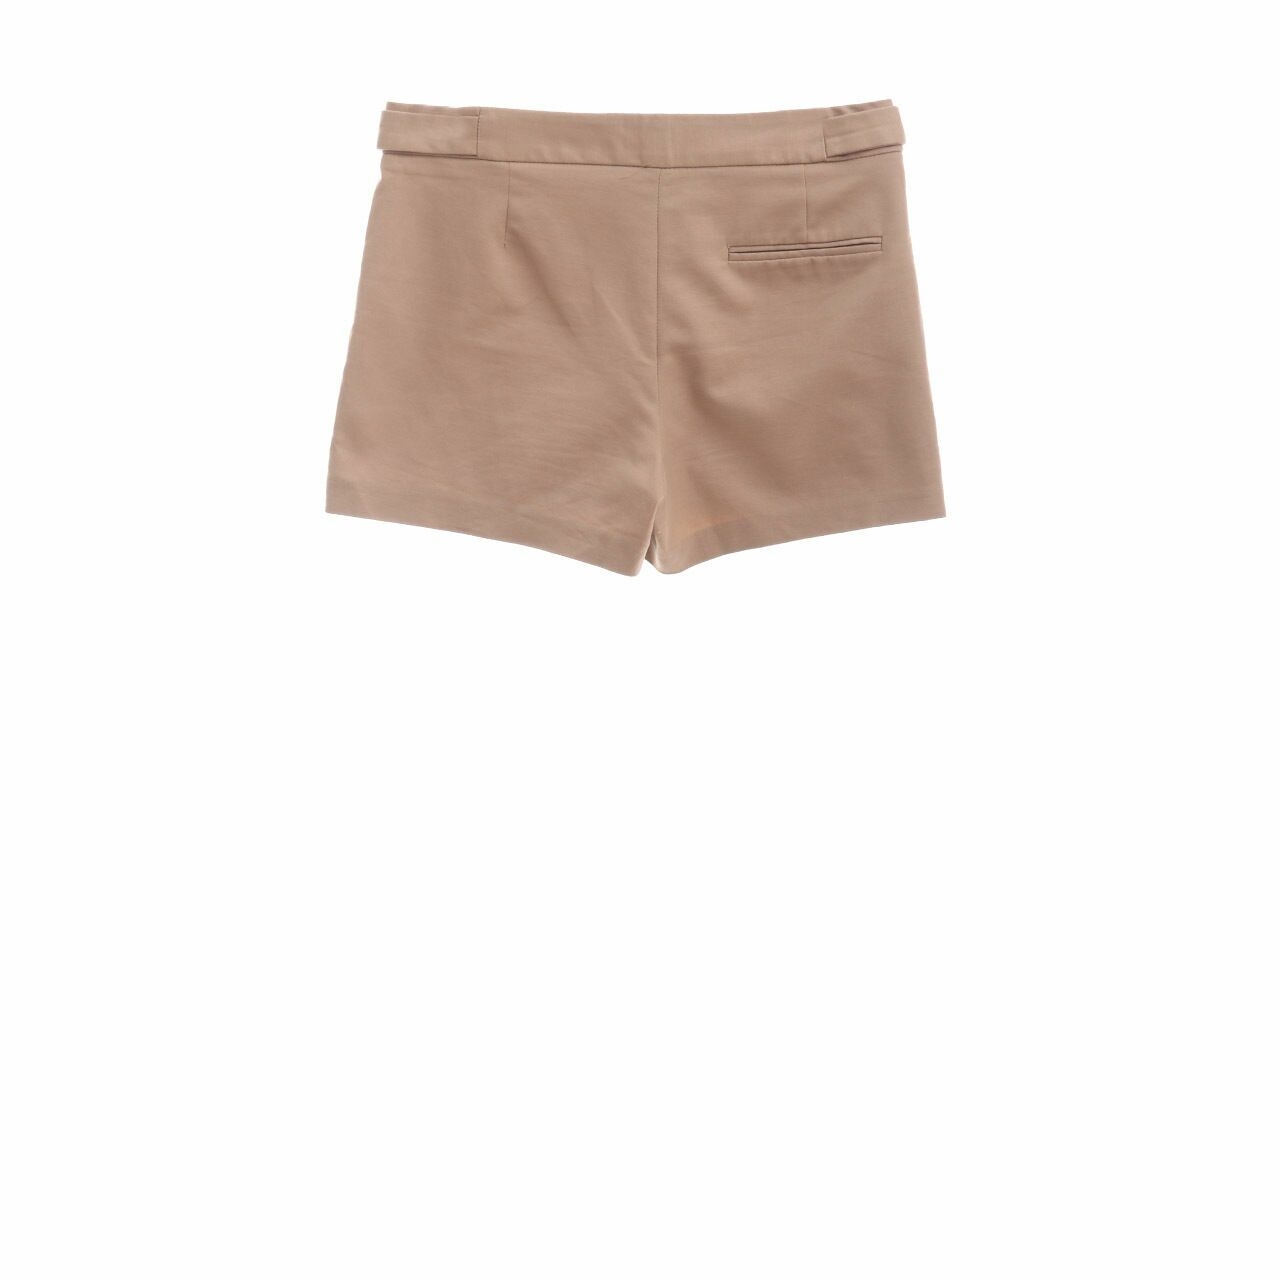 Zara Brown Short Pants